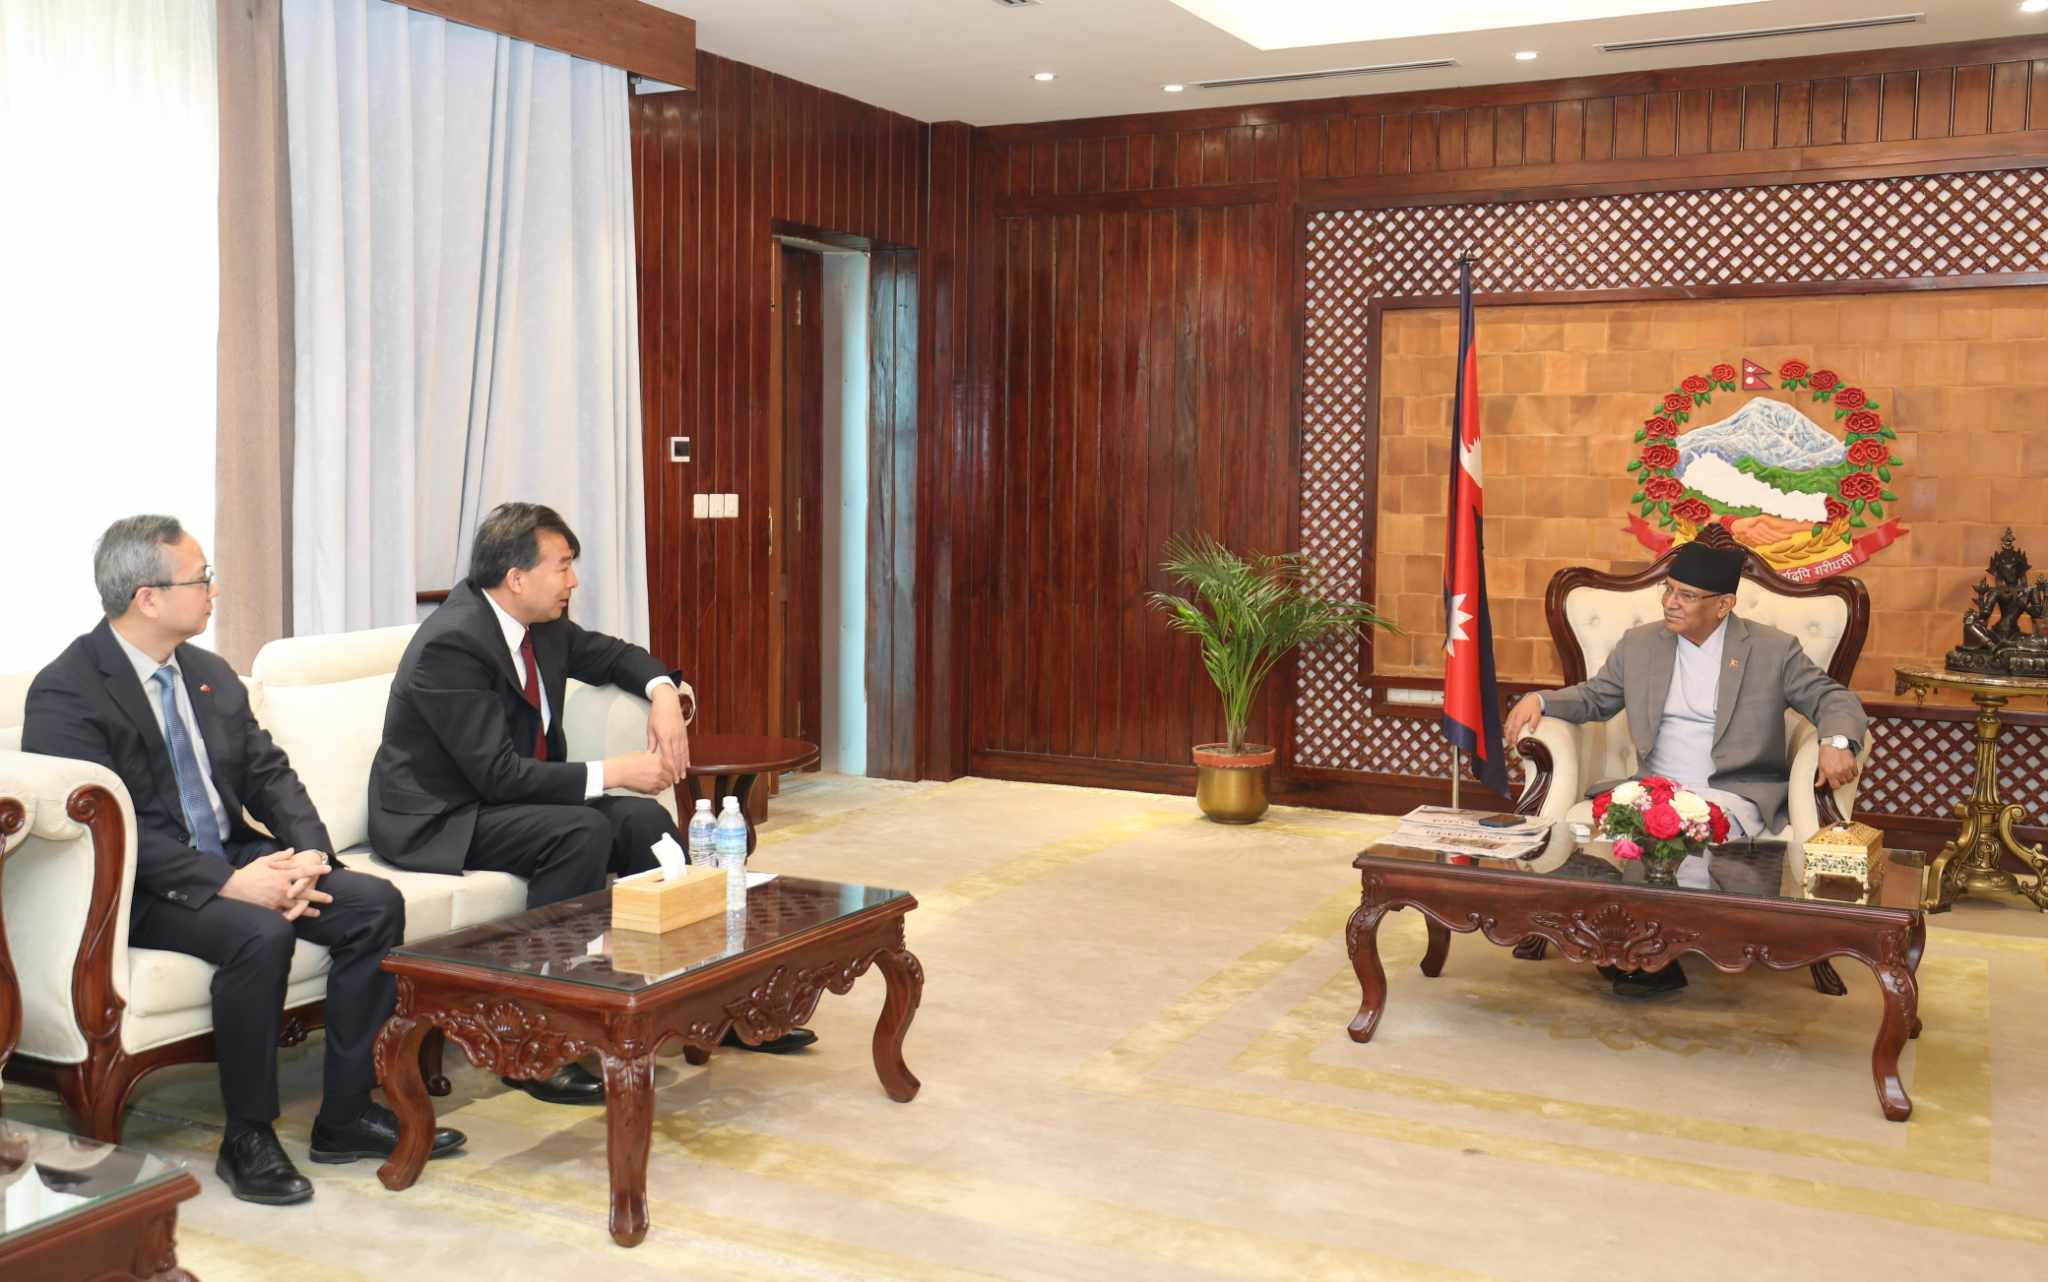 President of China’s CIDCA meets PM Dahal